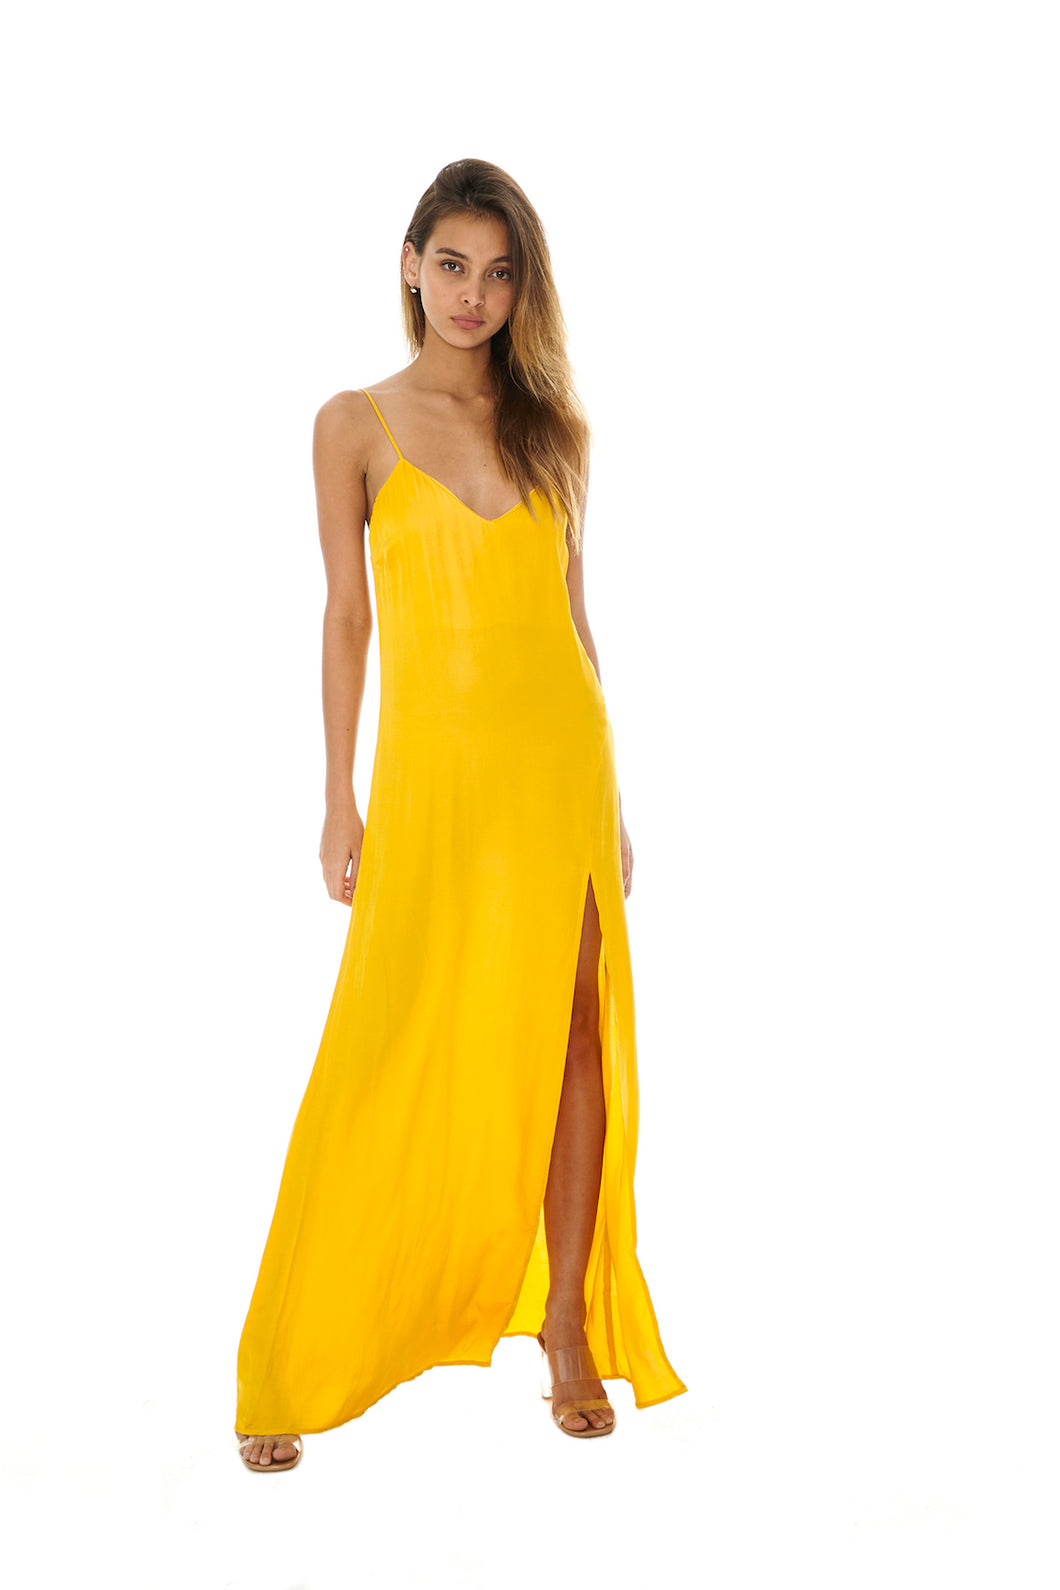 yellow maxi dress, v-neck maxi dress, Slinky maxi,  Adjustable straps, maxi with Side slit detail